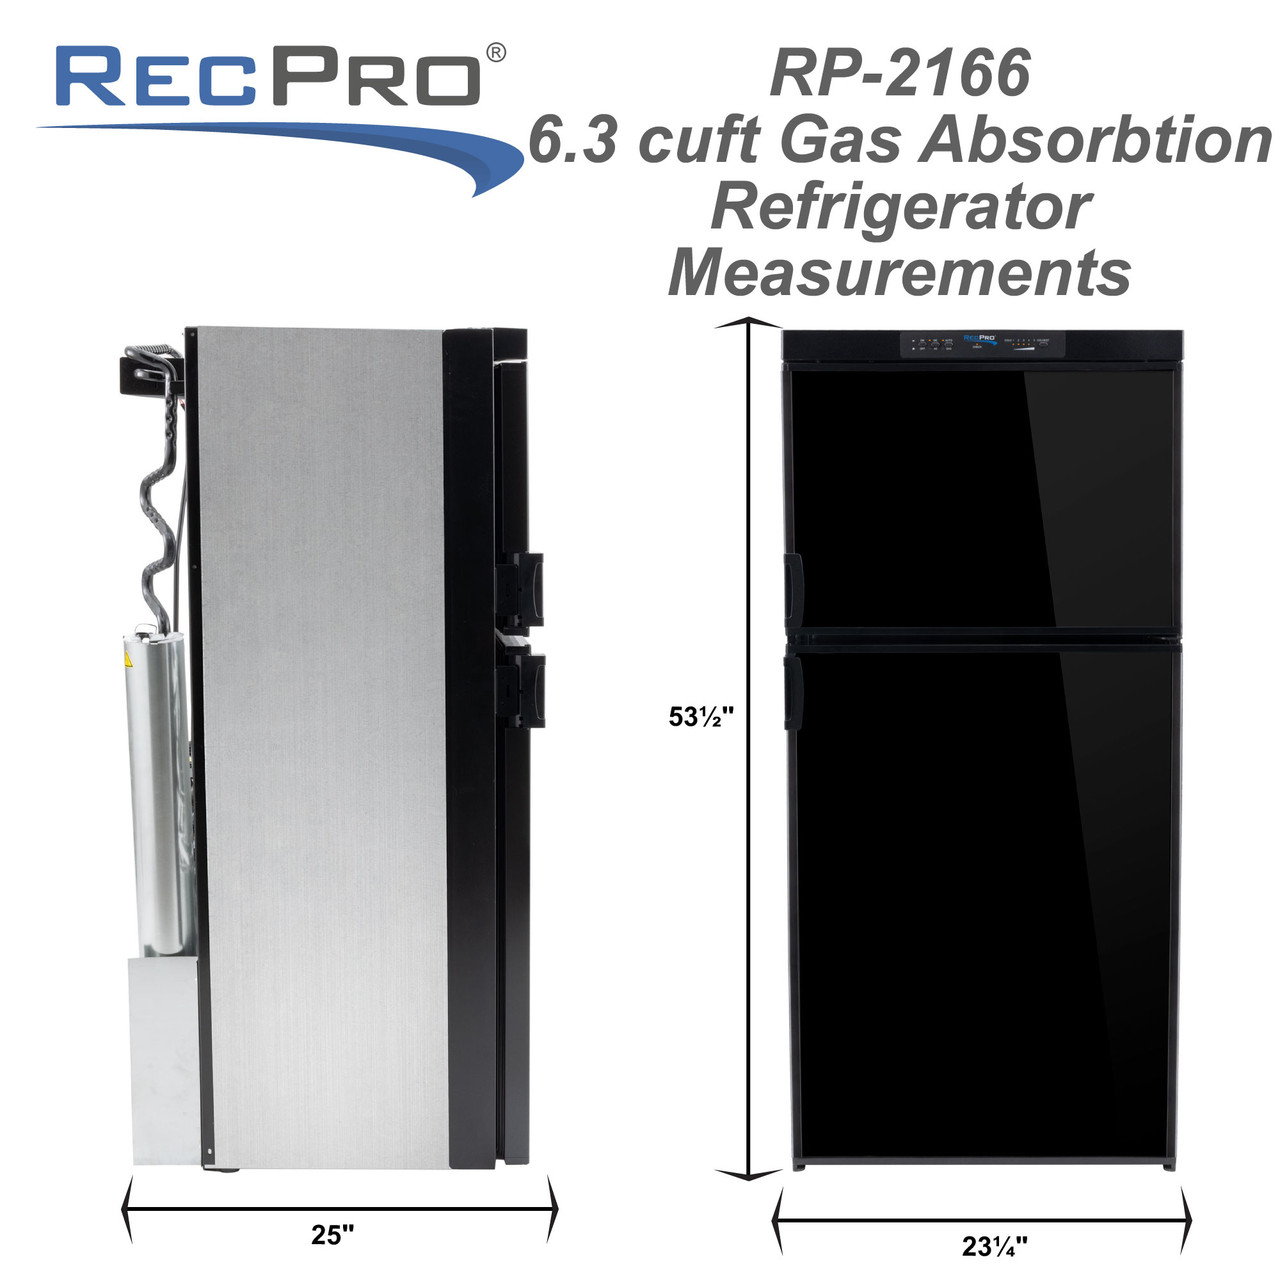 The Ultimate RV Refrigerator Guide